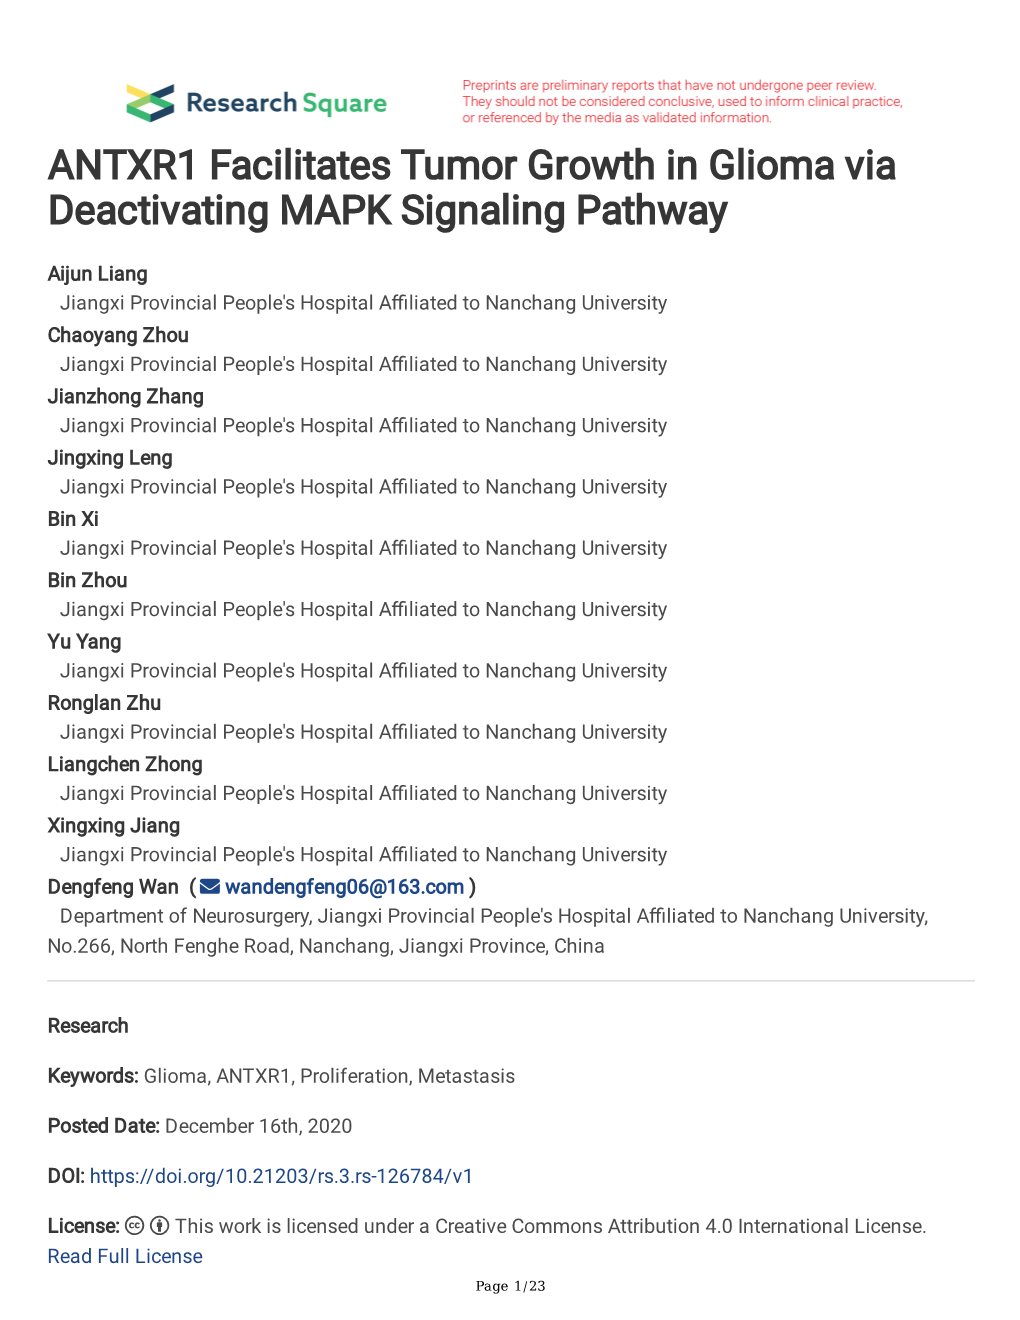 ANTXR1 Facilitates Tumor Growth in Glioma Via Deactivating MAPK Signaling Pathway